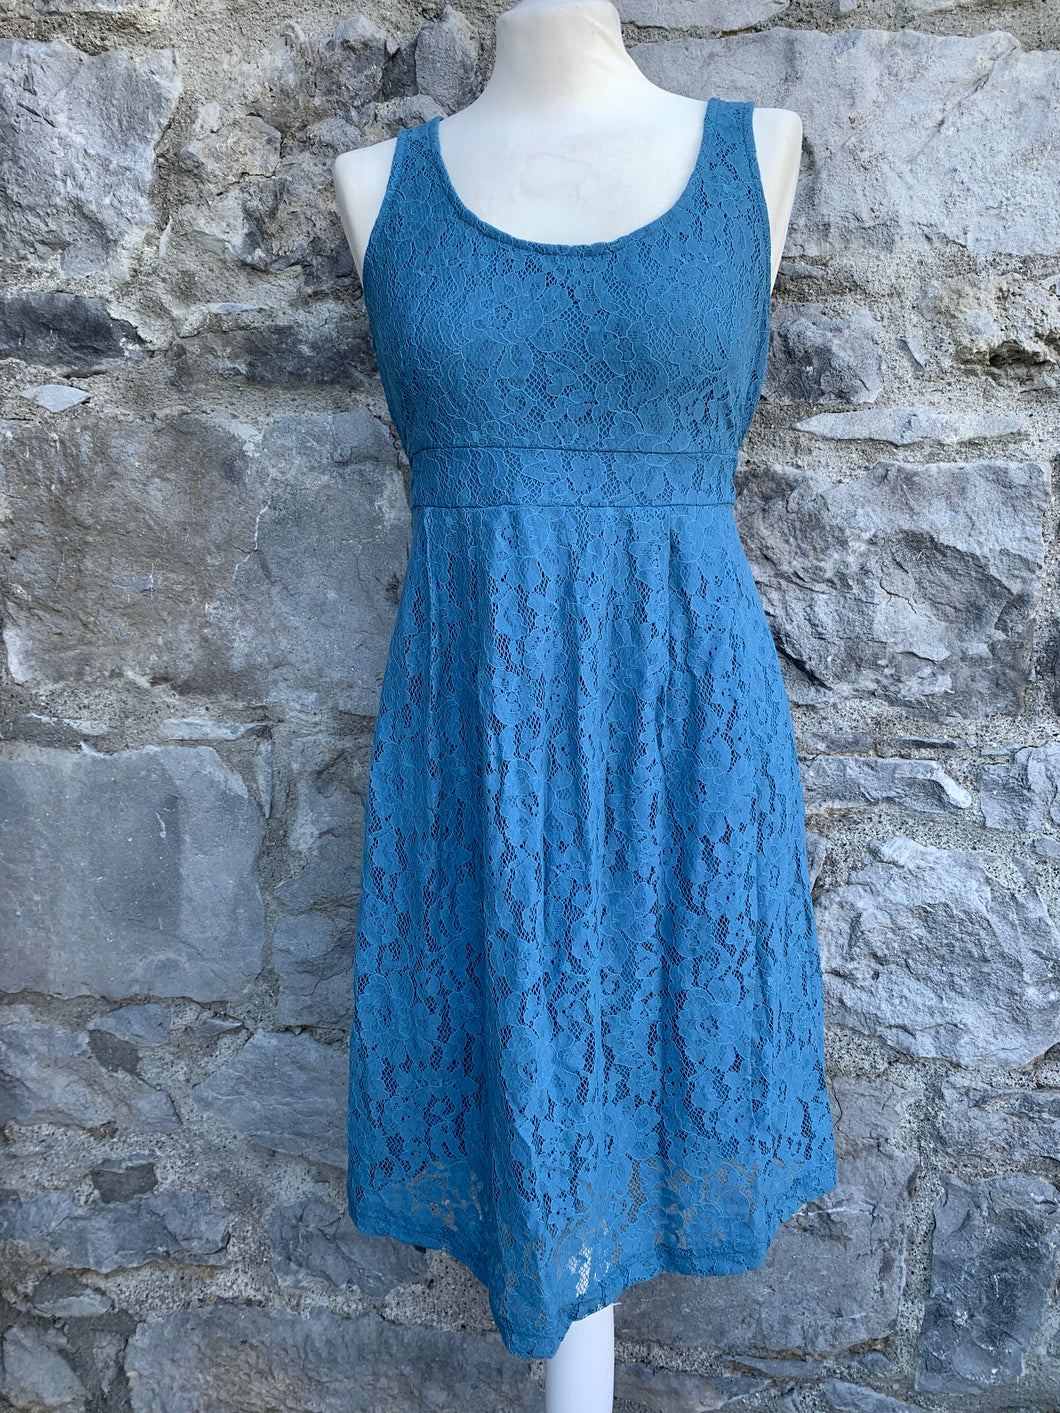 Blue lace maternity dress   8-10